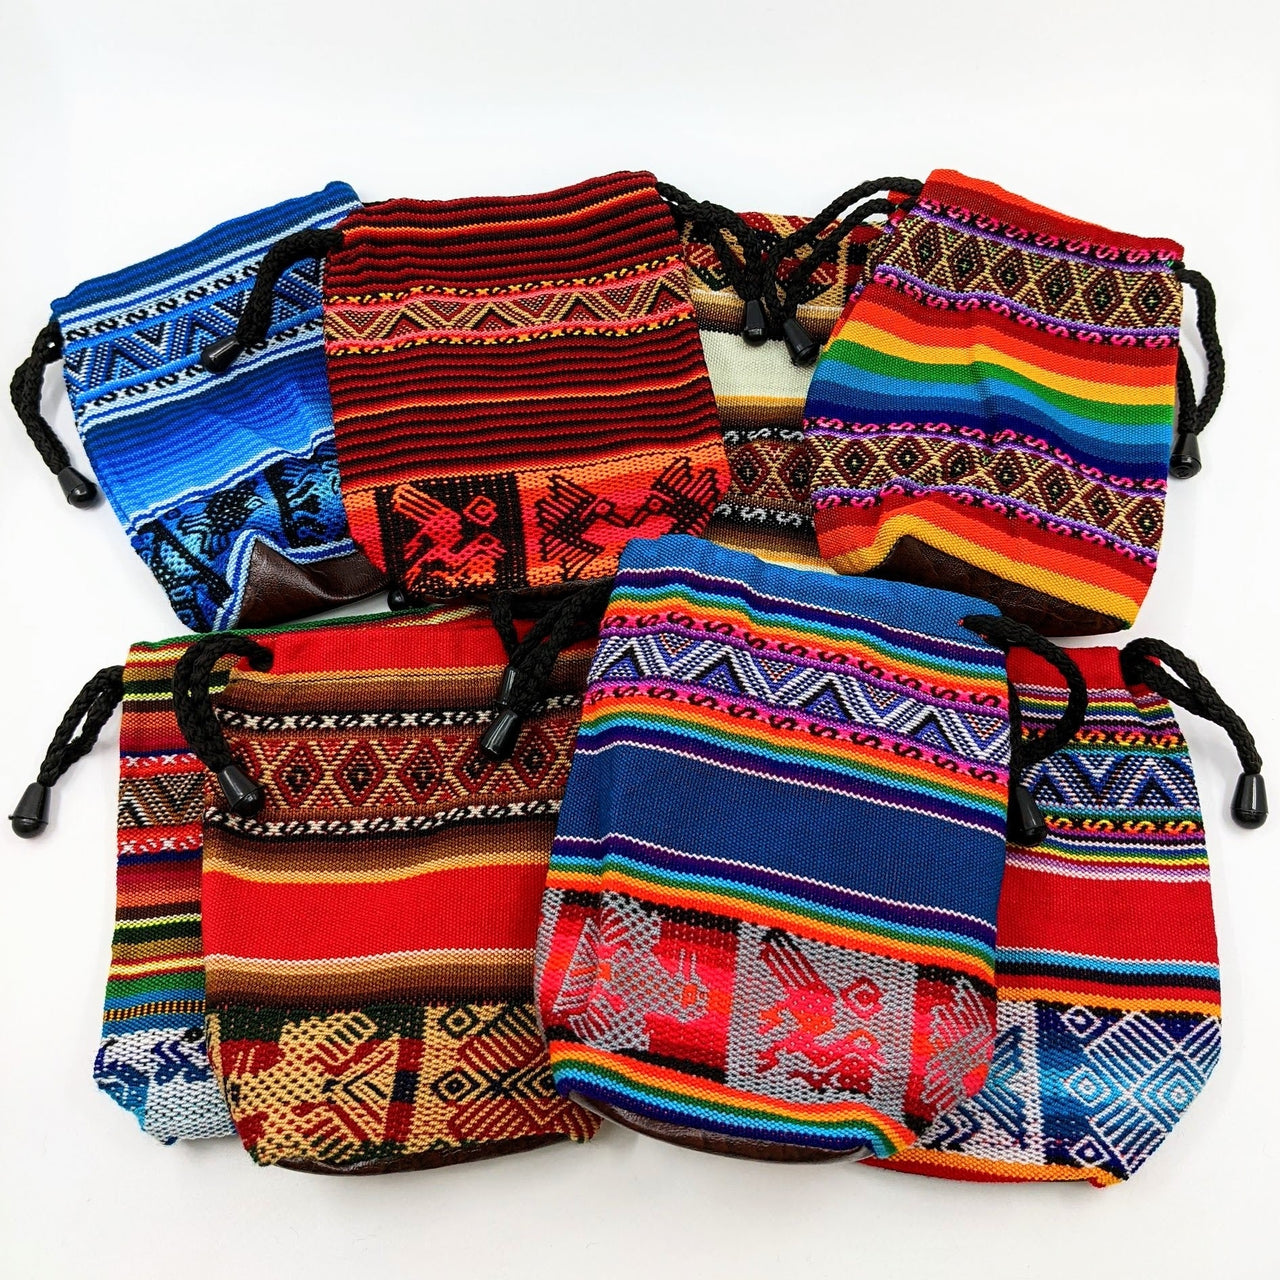 1 Peruvian Bag Multi Color 5x6 (27g) #SK7900 - $20